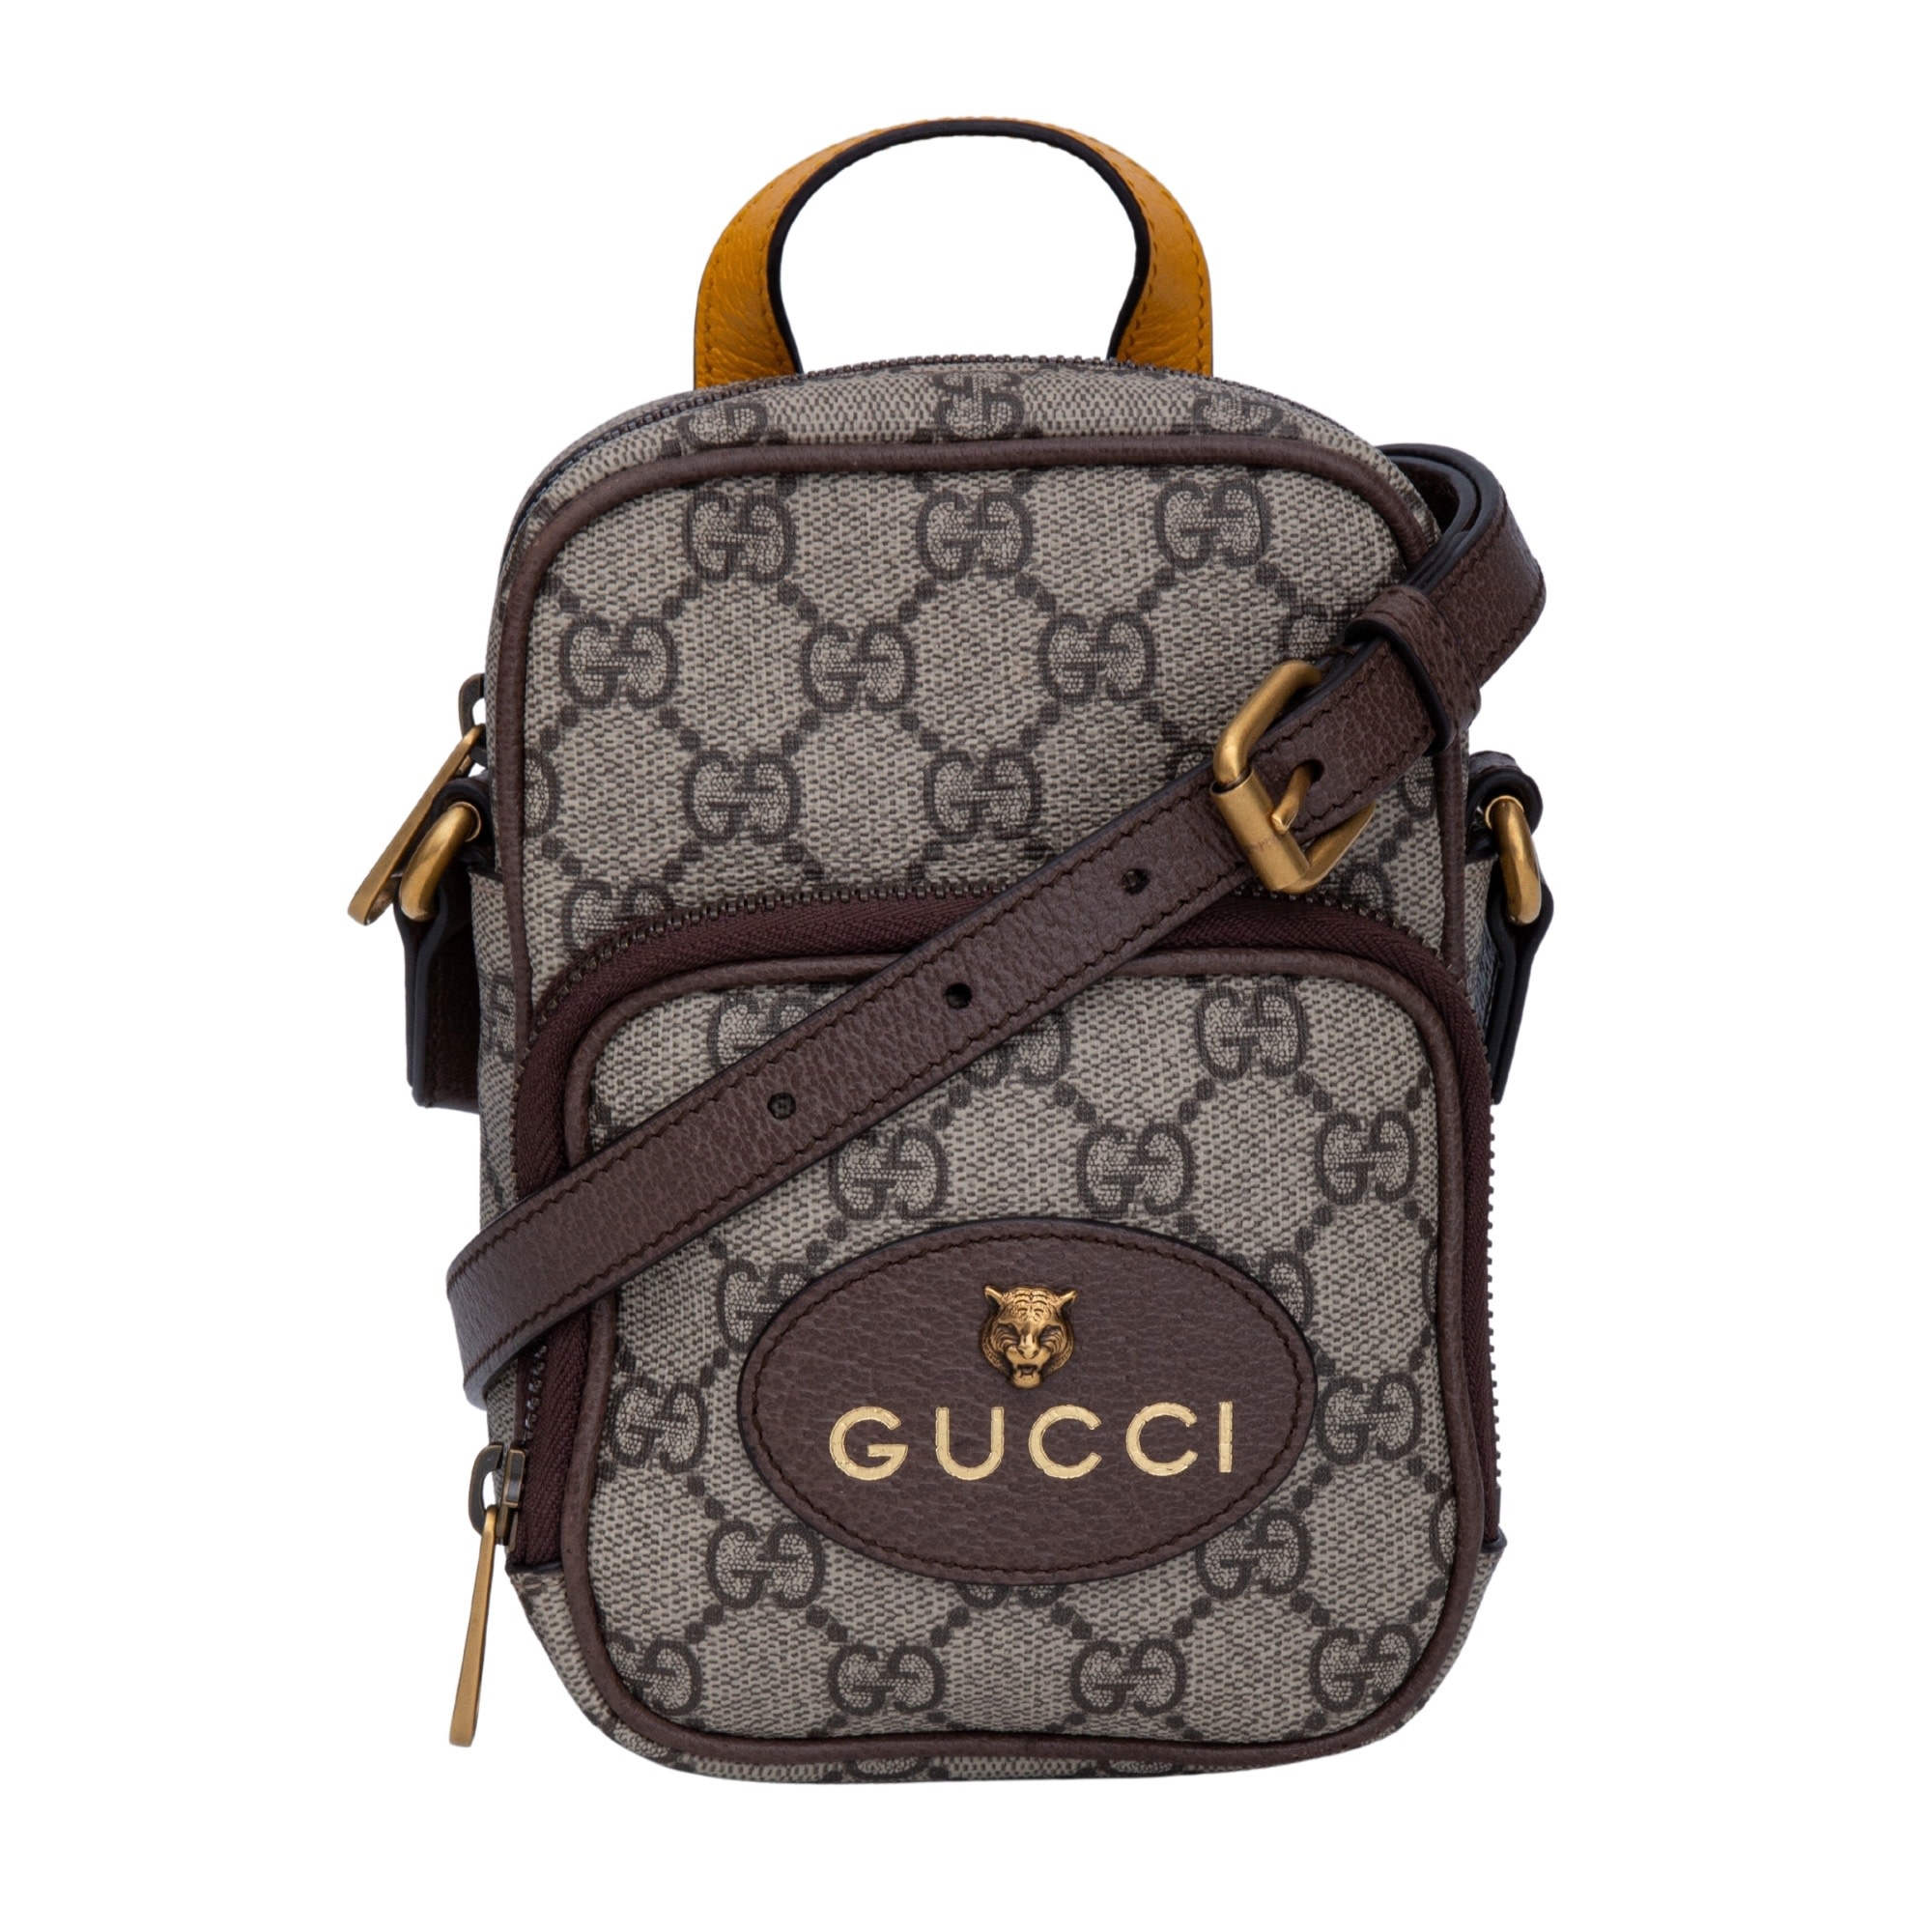 Real Vs Fake Gucci Neo Vintage GG Supreme Messenger Bag HD Compairson 